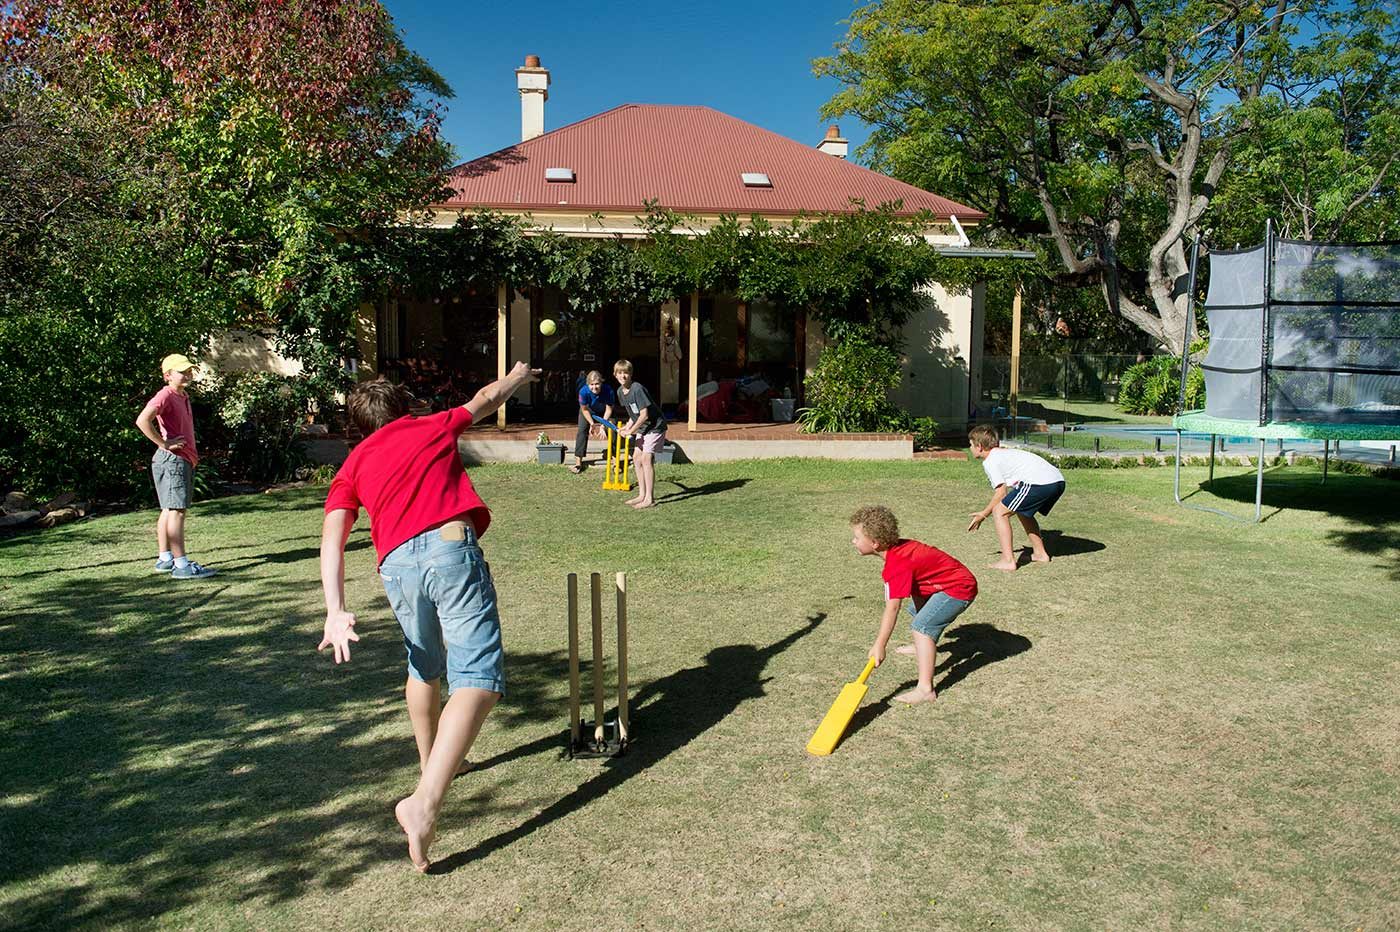 What is backyard cricket?